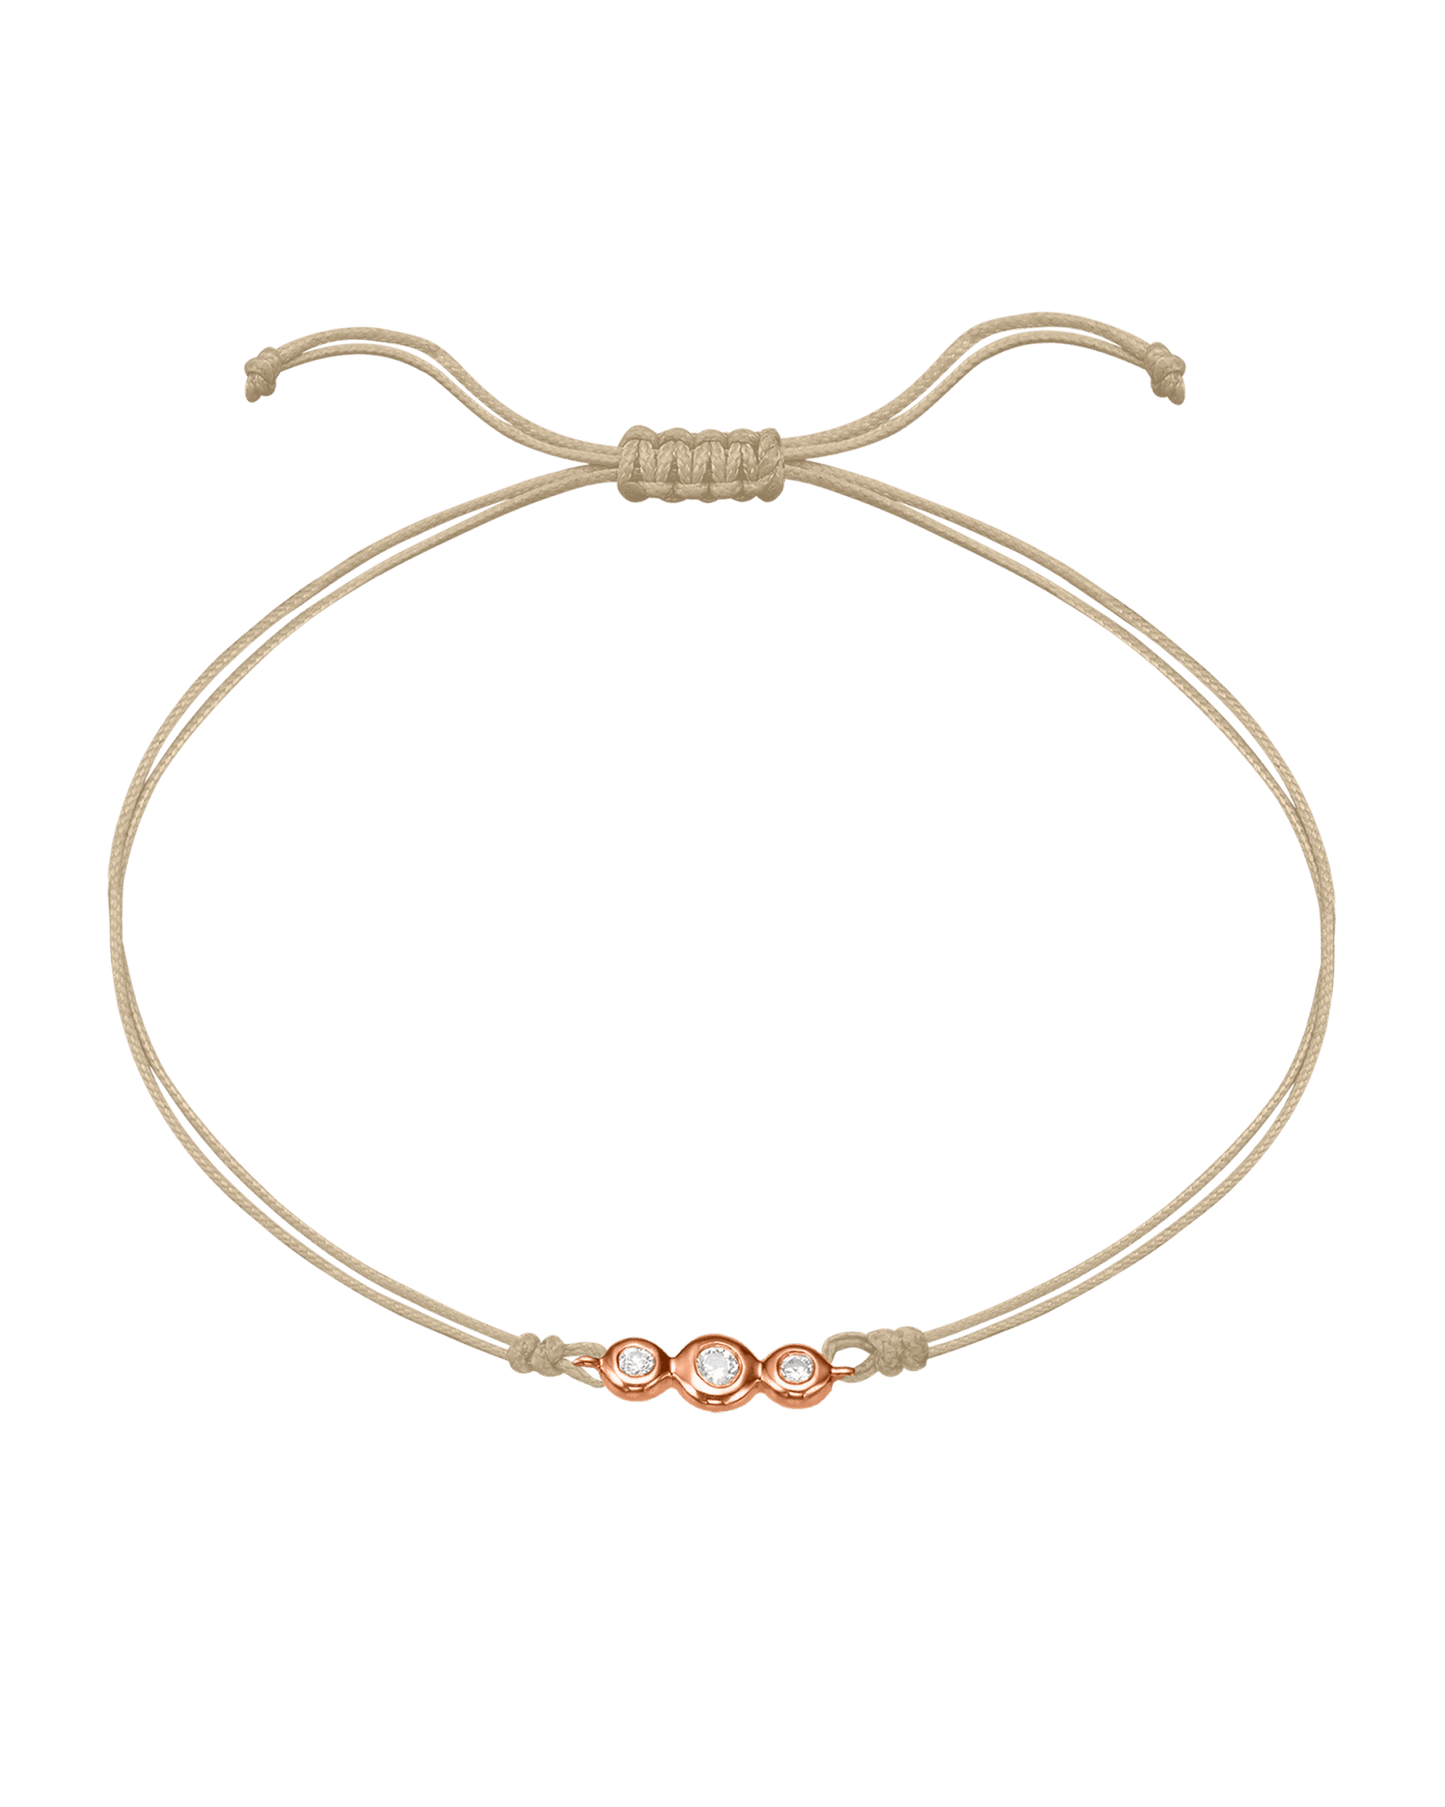 The Three of Us Diamond String of love - 14K Rose Gold Bracelet 14K Solid Gold Beige 